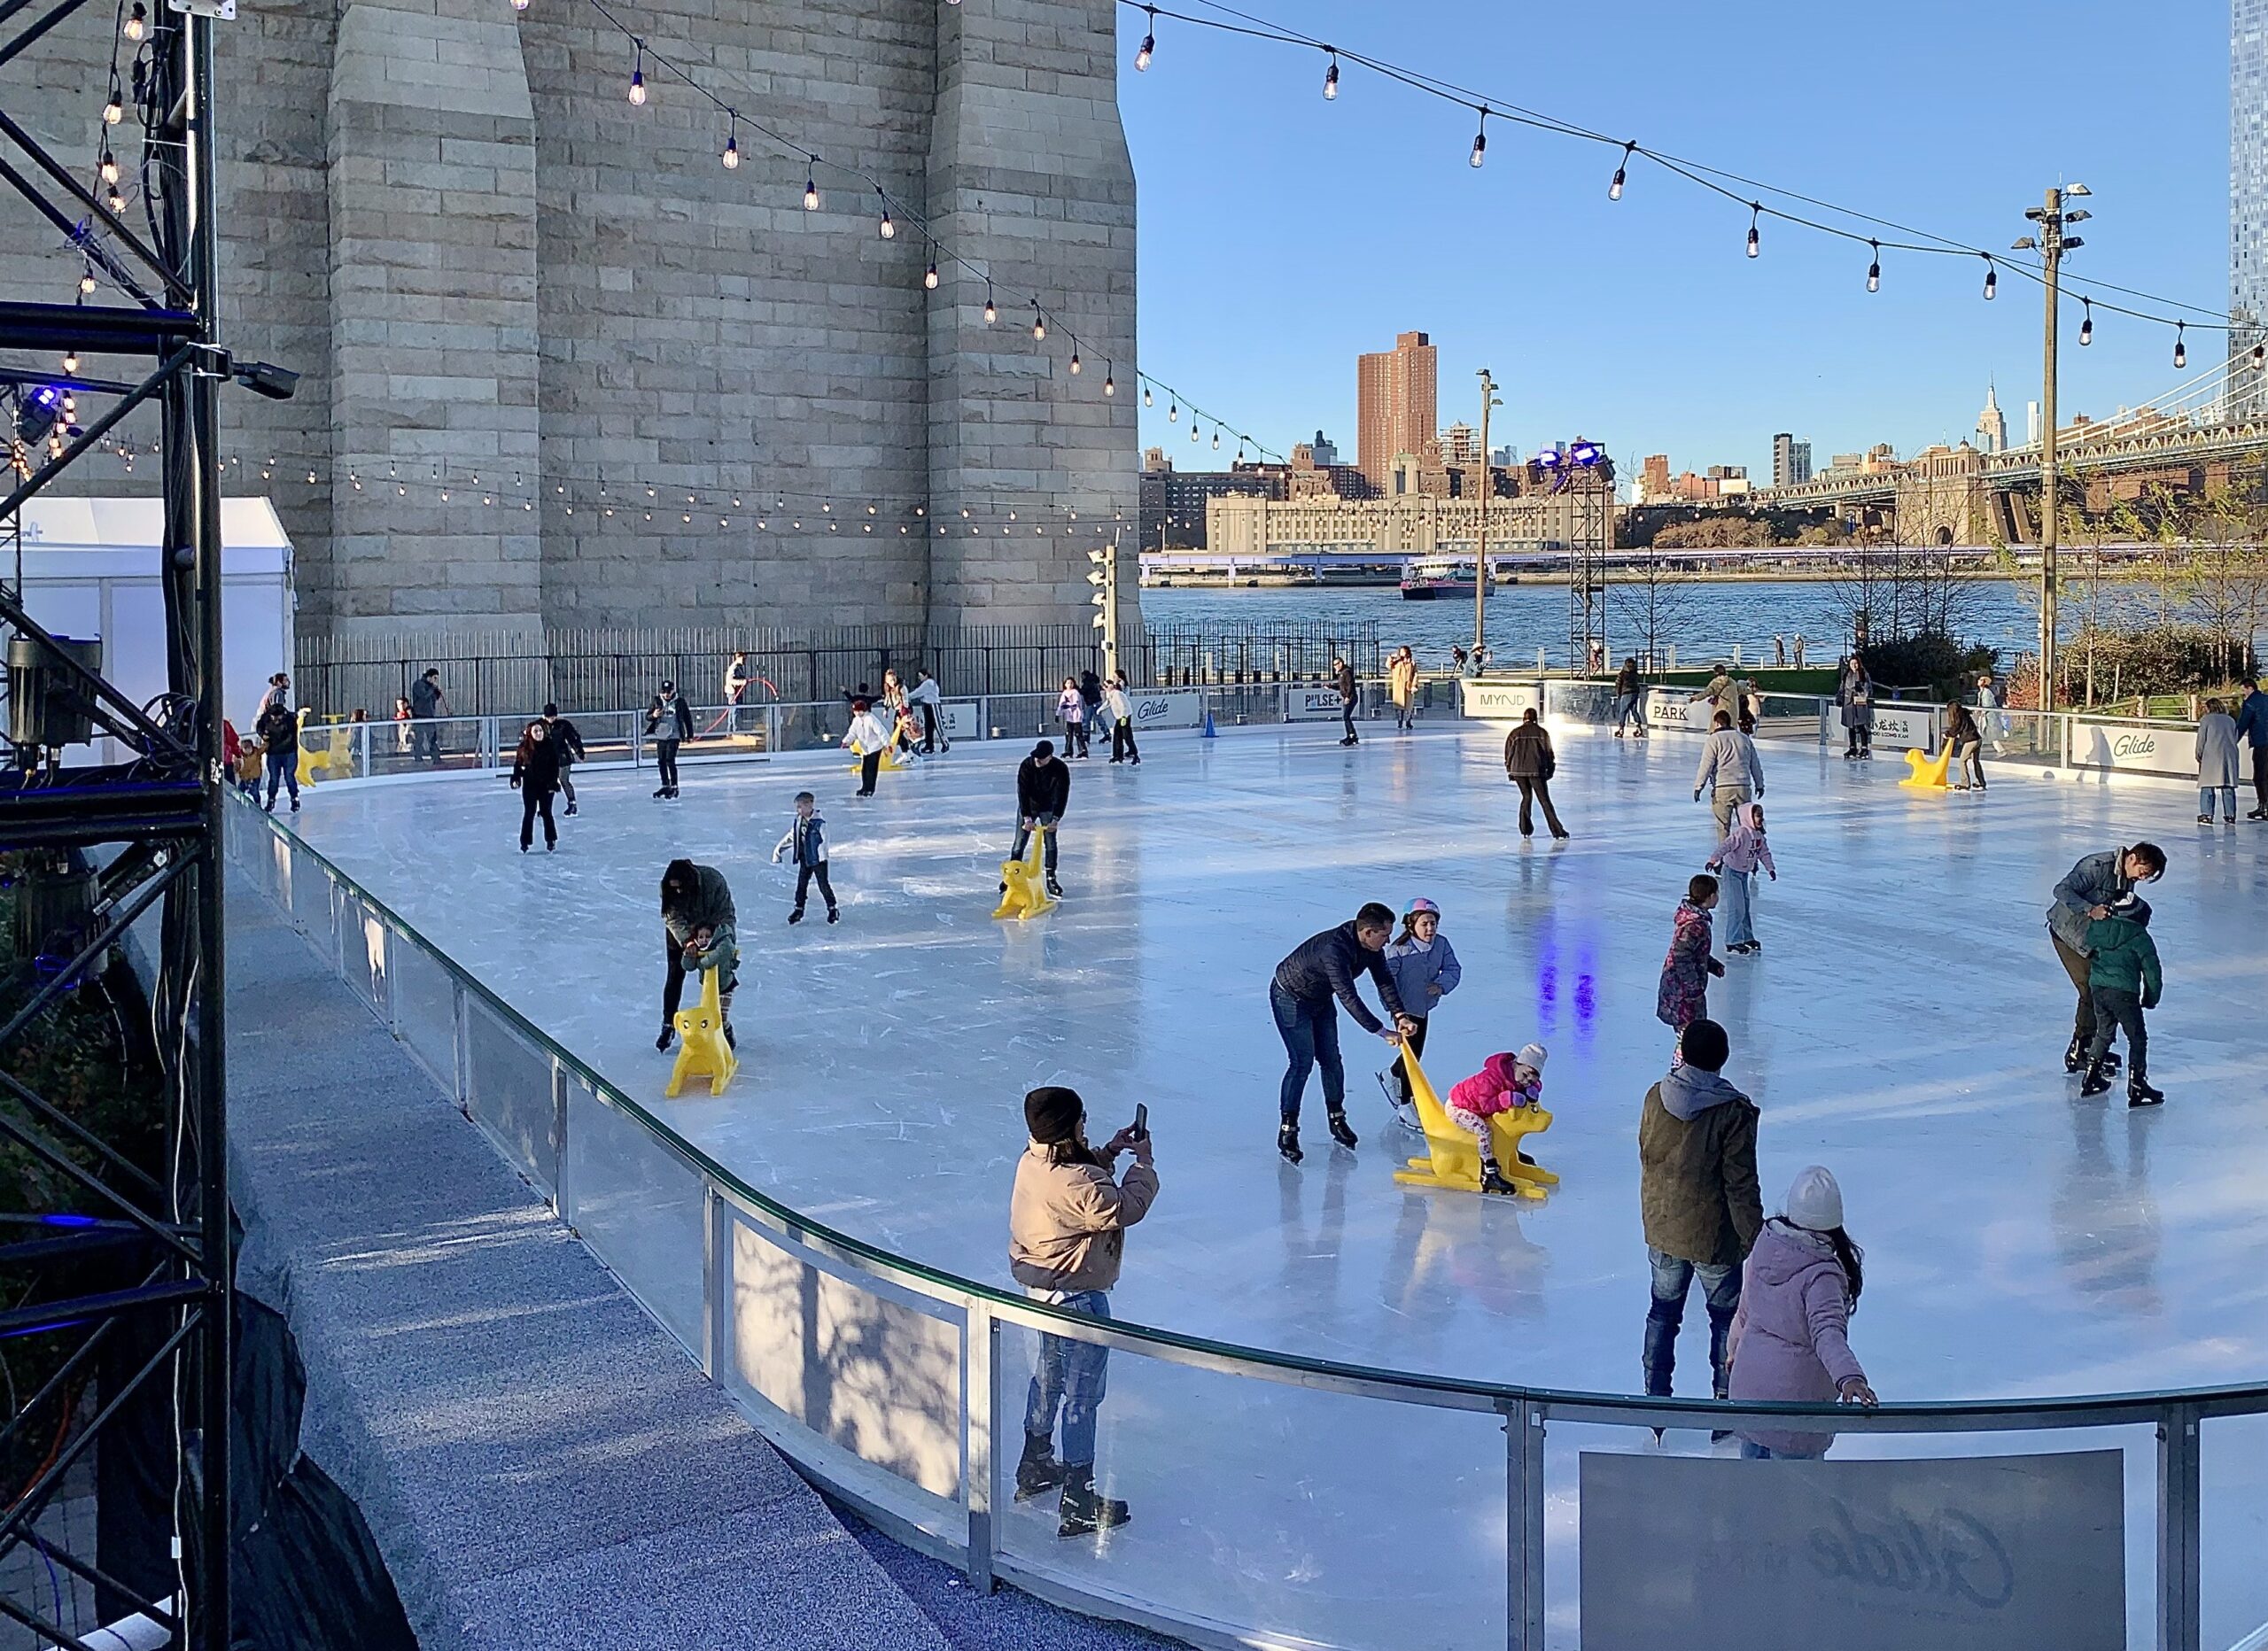 Ice skating rink with amazing views opens under Brooklyn Bridge